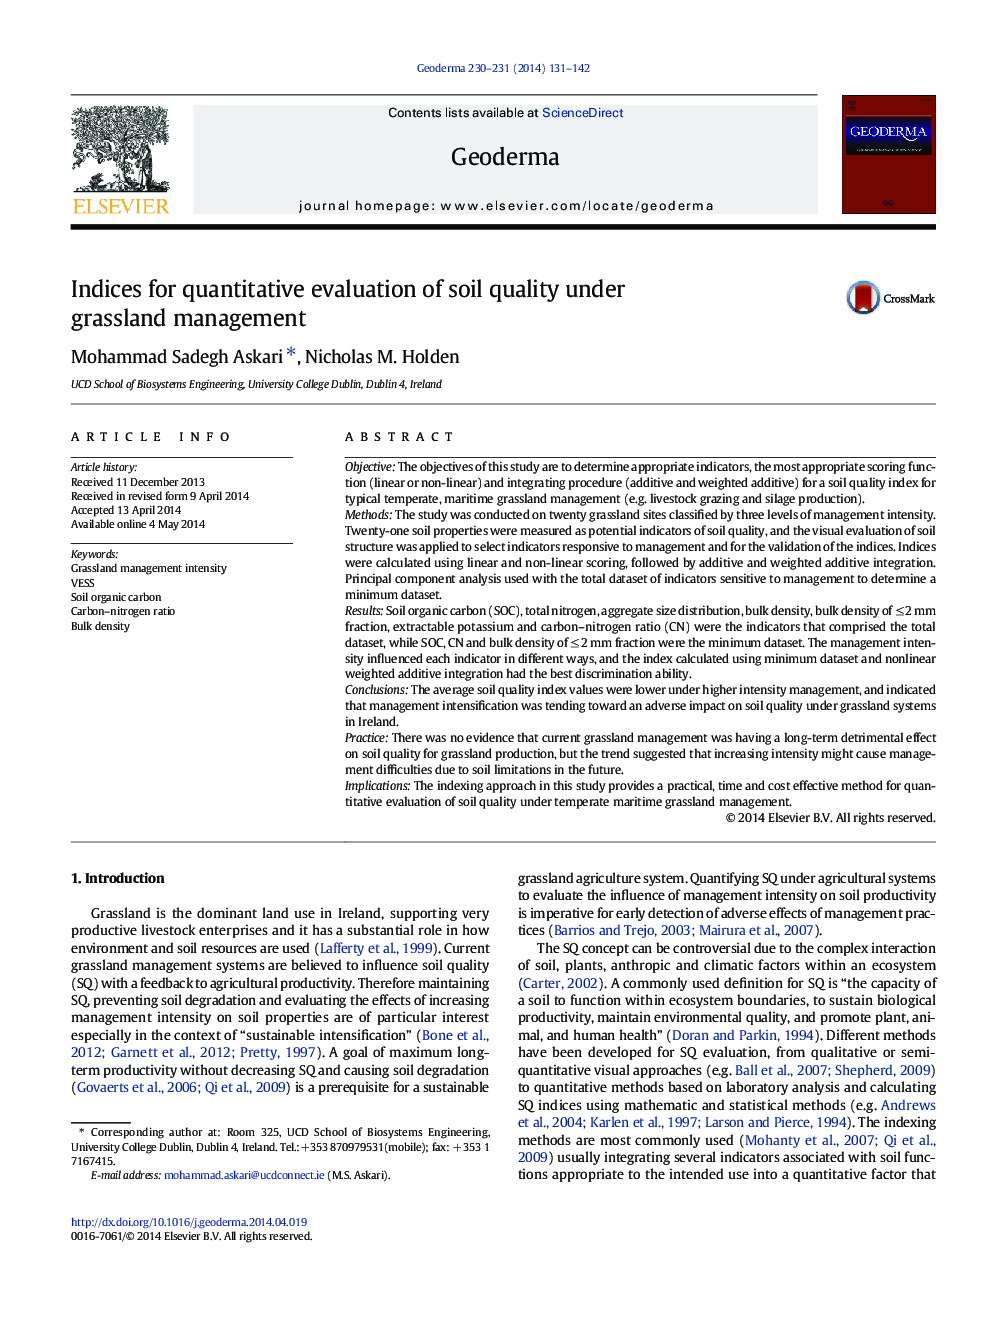 Indices for quantitative evaluation of soil quality under grassland management